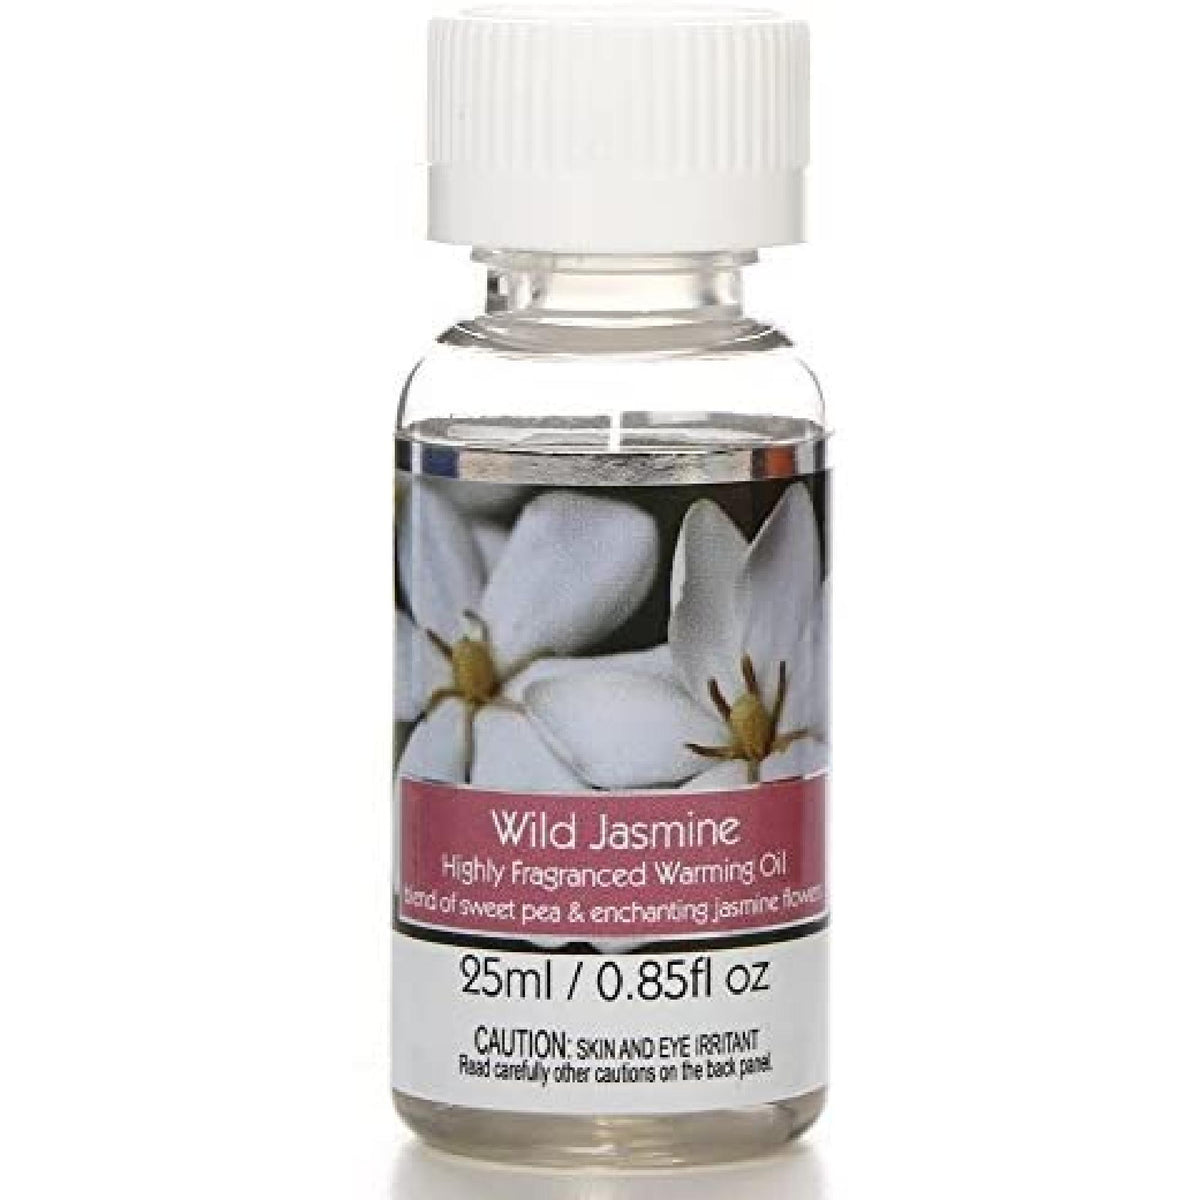 HOSLEY® Wild Jasmine Fragrance Warming Oil,  Set of 6,  25ml Each